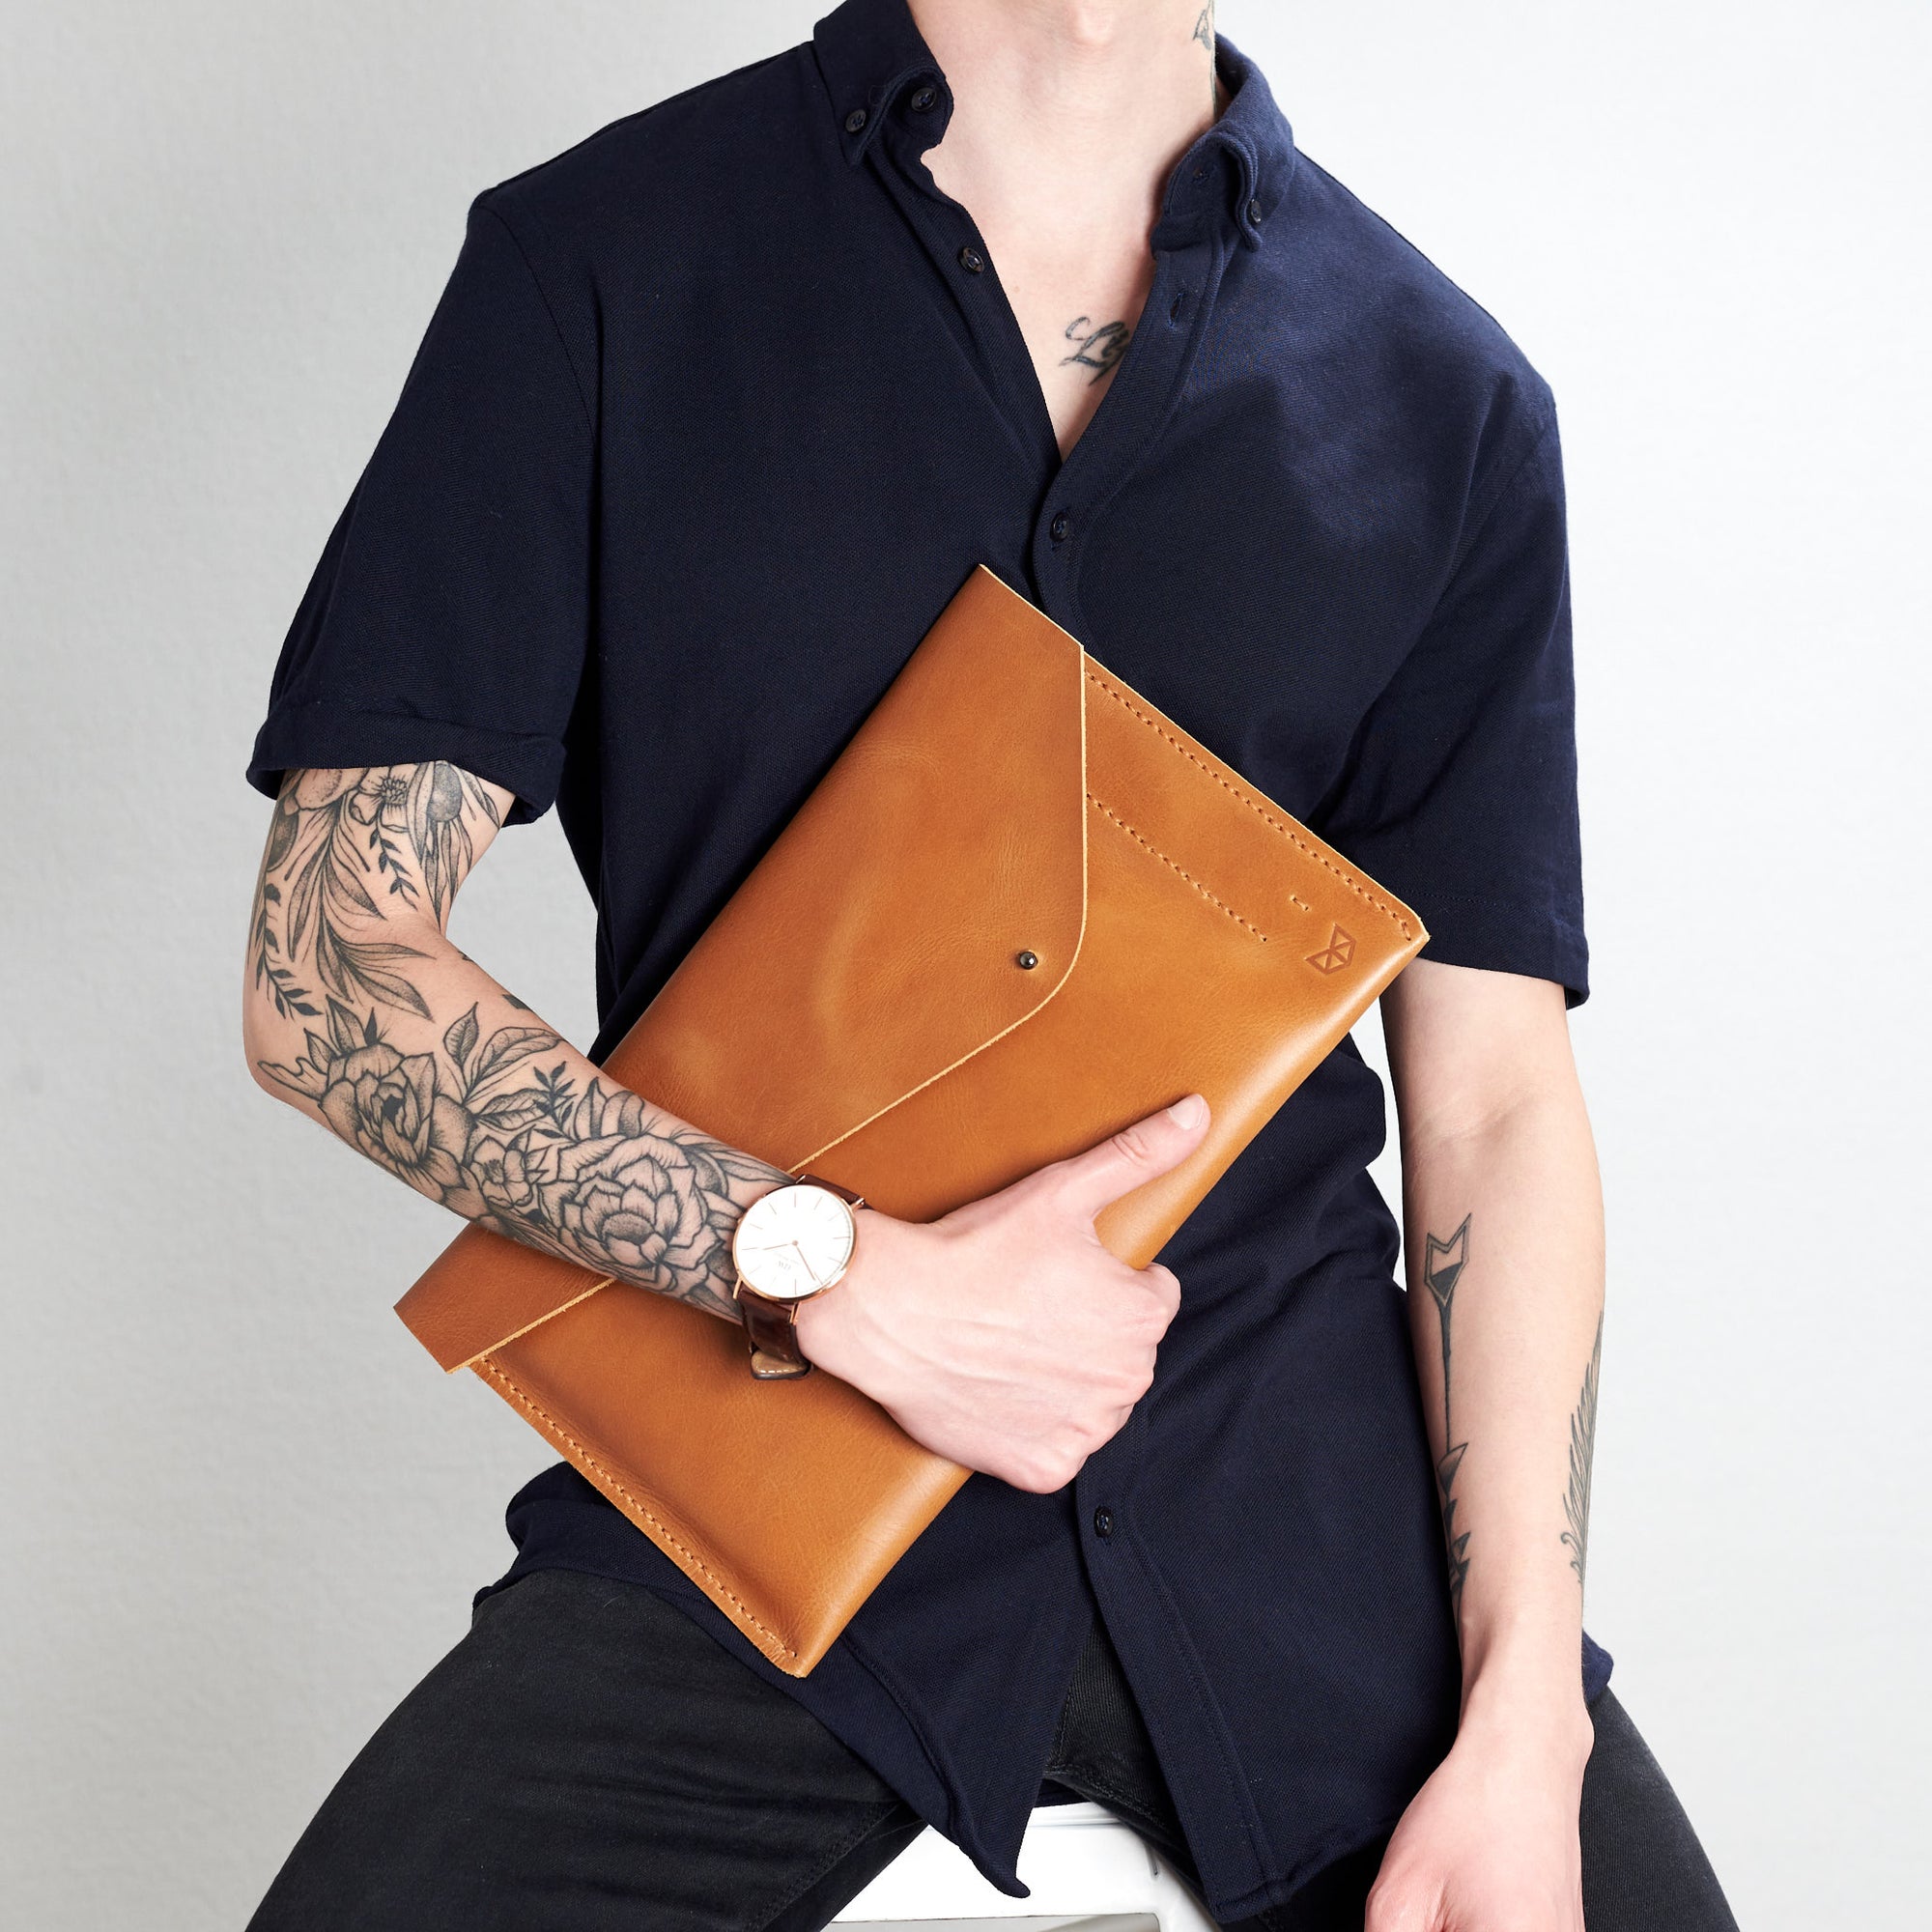 Light brown handcrafted leather reMarkable tablet case. Folio with Marker holder. Paper E-ink tablet minimalist sleeve design. 